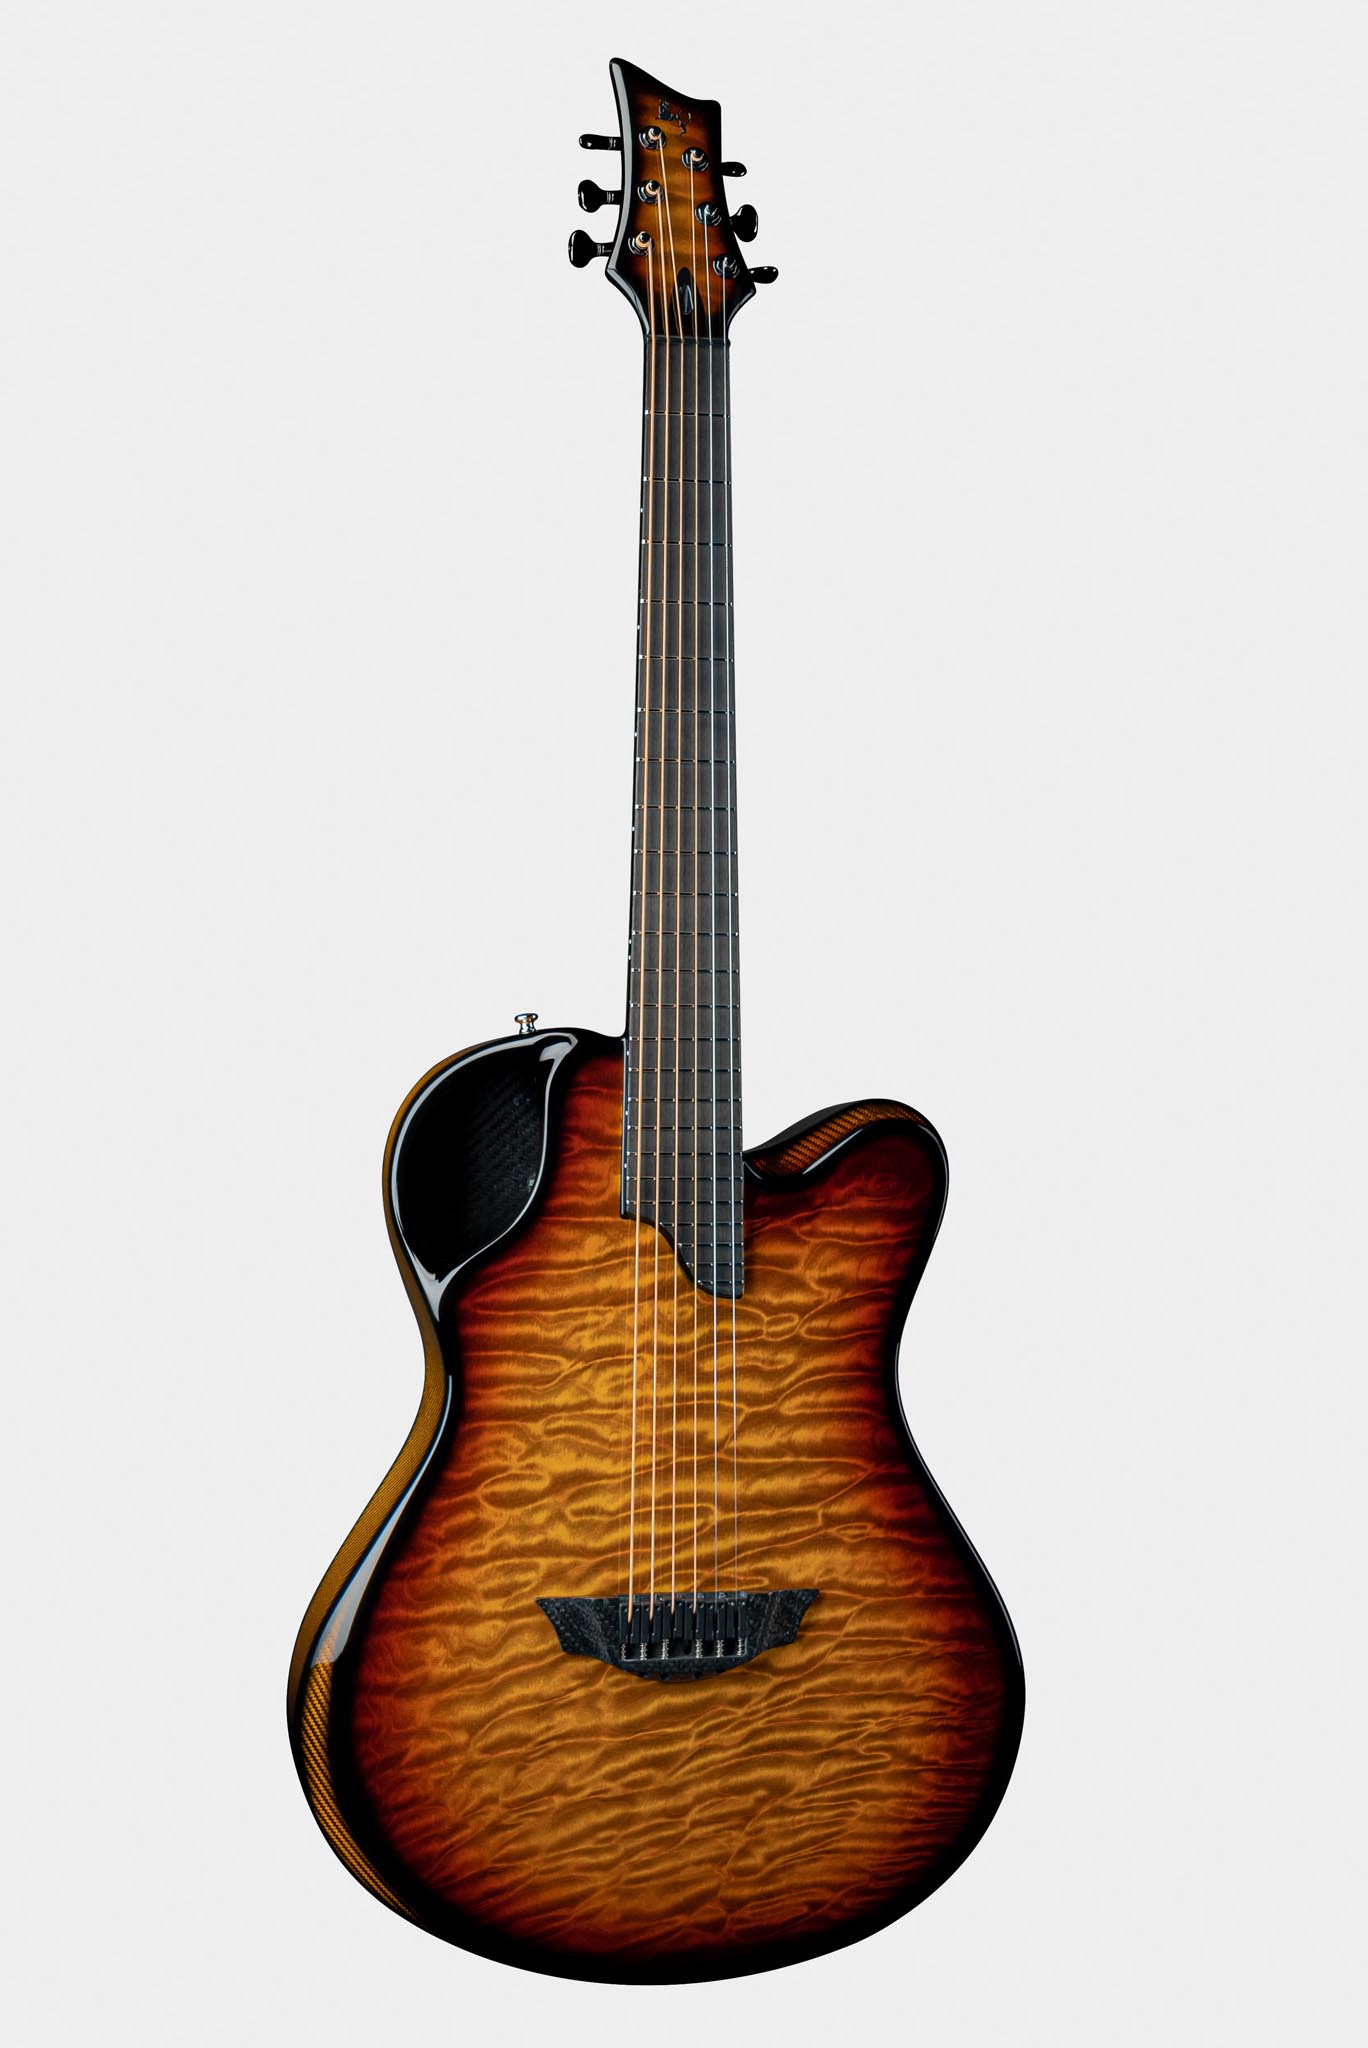 Emerald X20 guitar with vibrant sunburst finish and carbon fiber construction